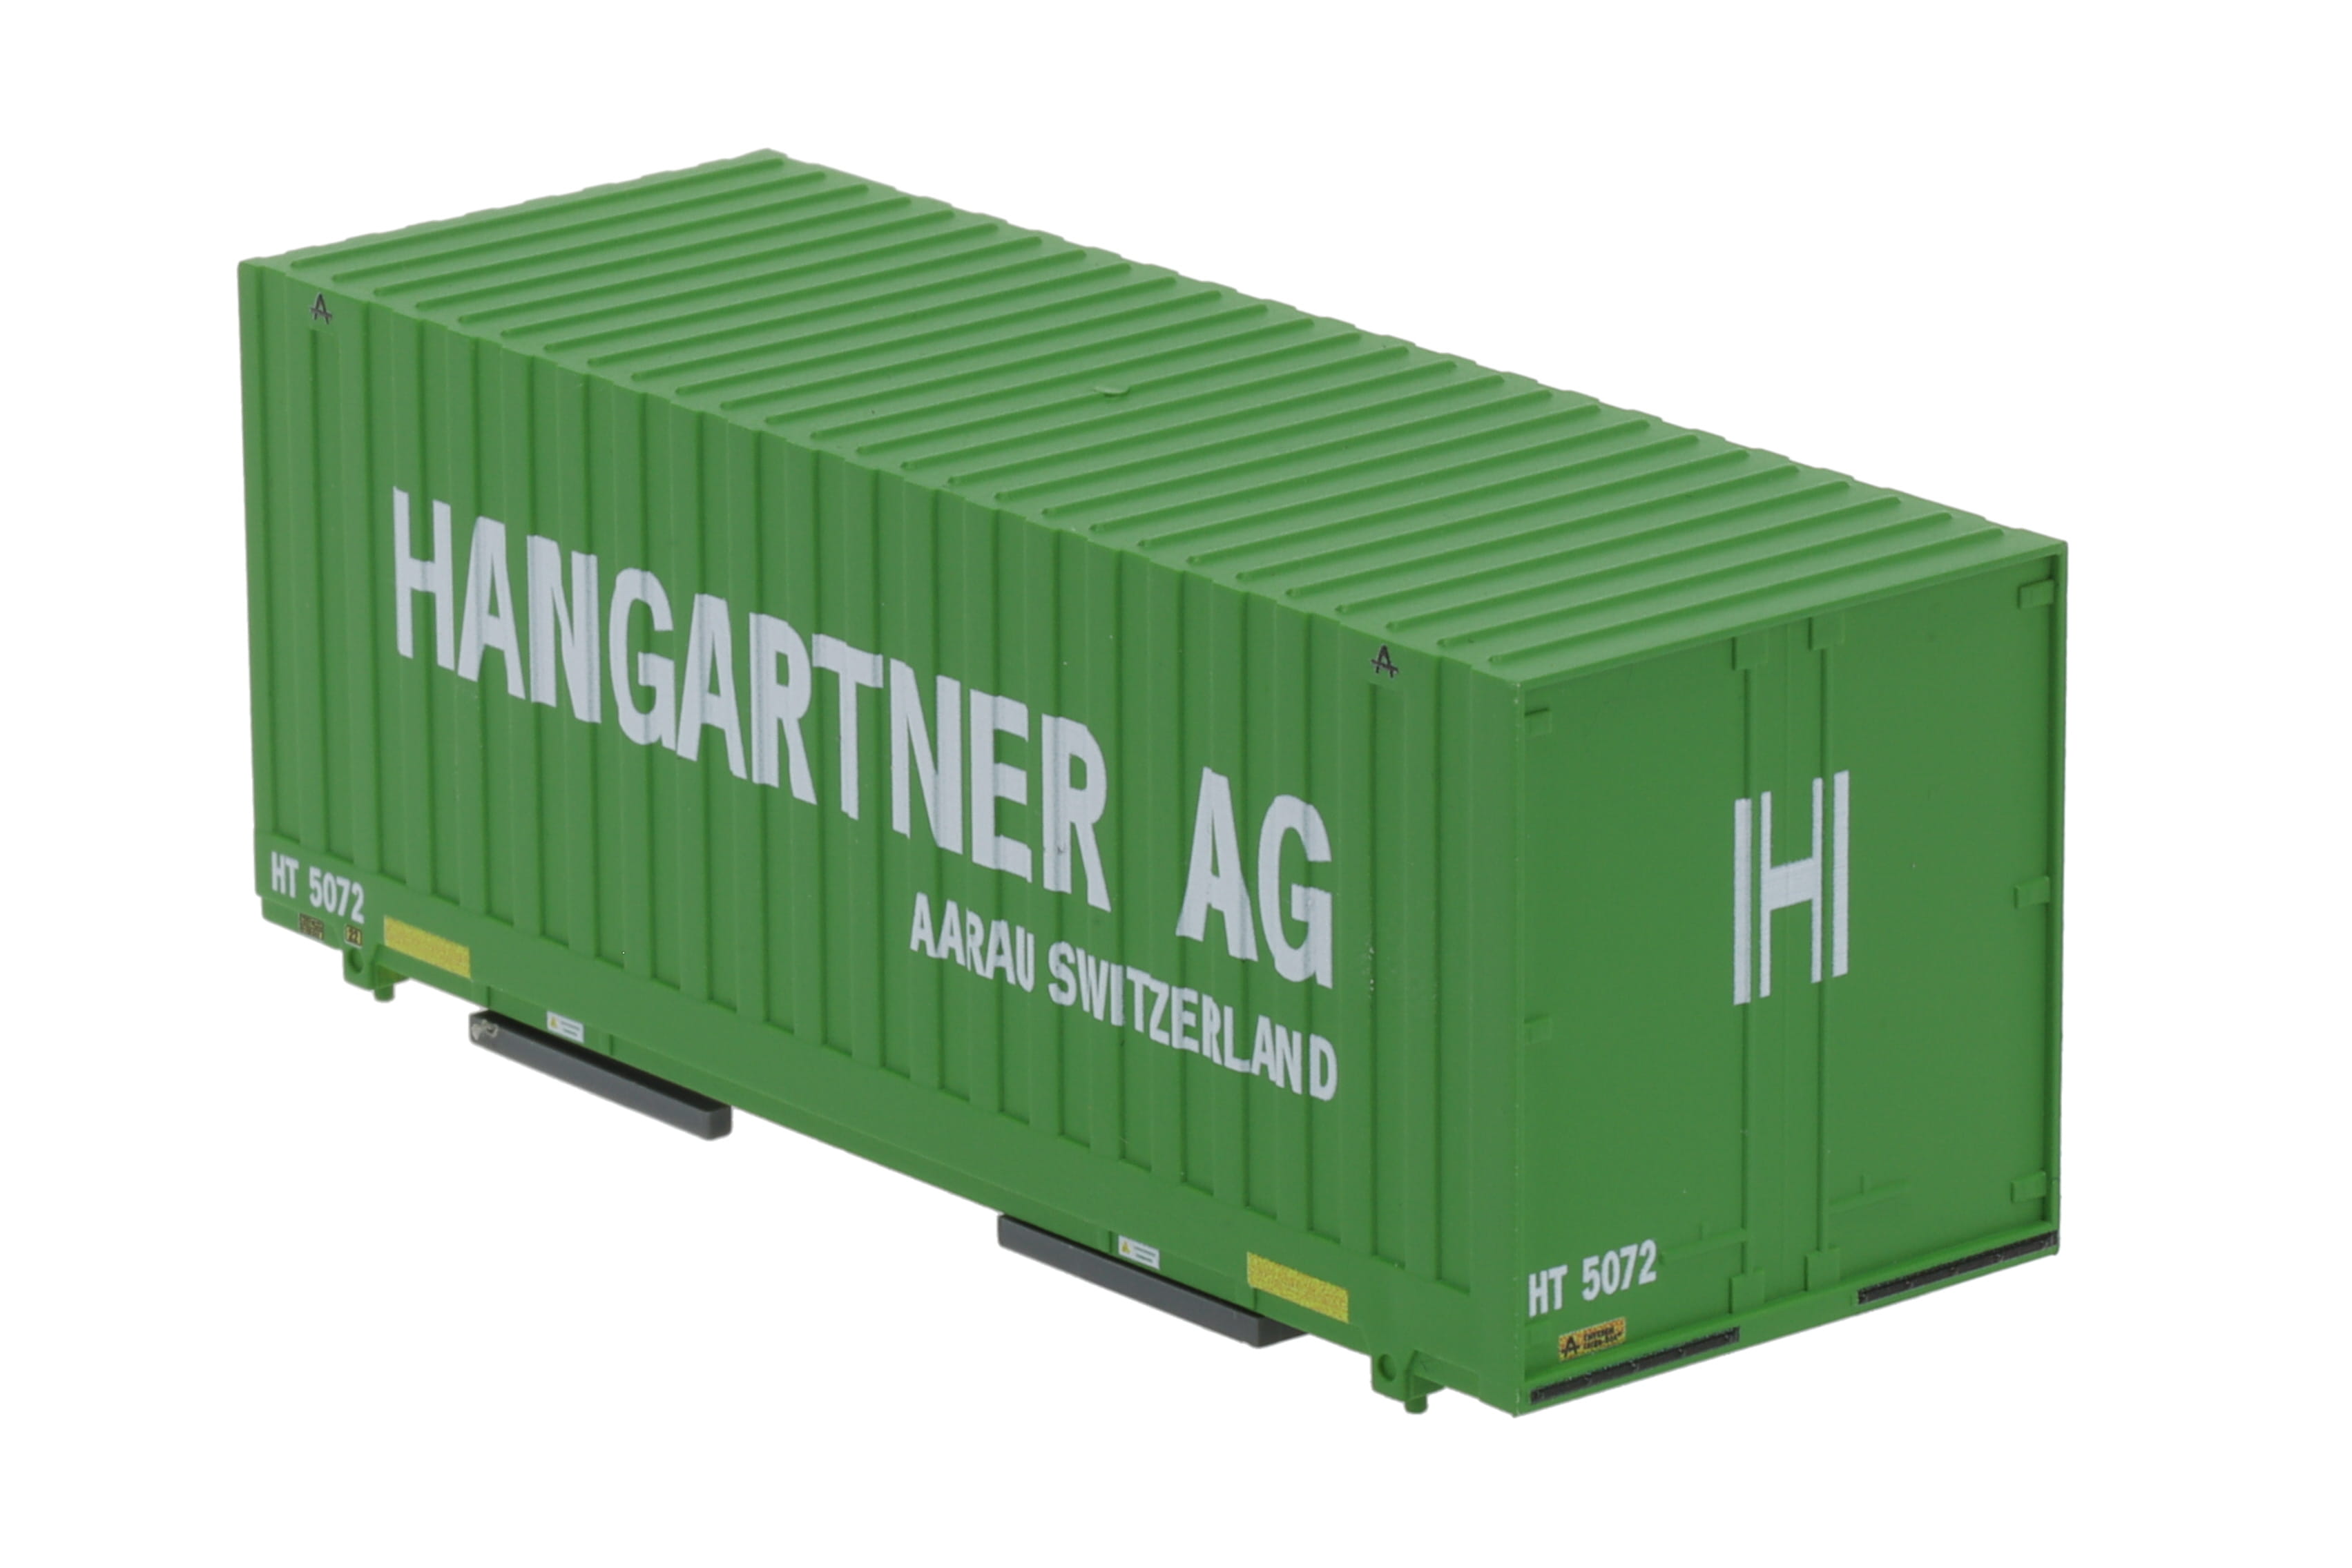 1:87 Container WB-C715 "Hangartner"